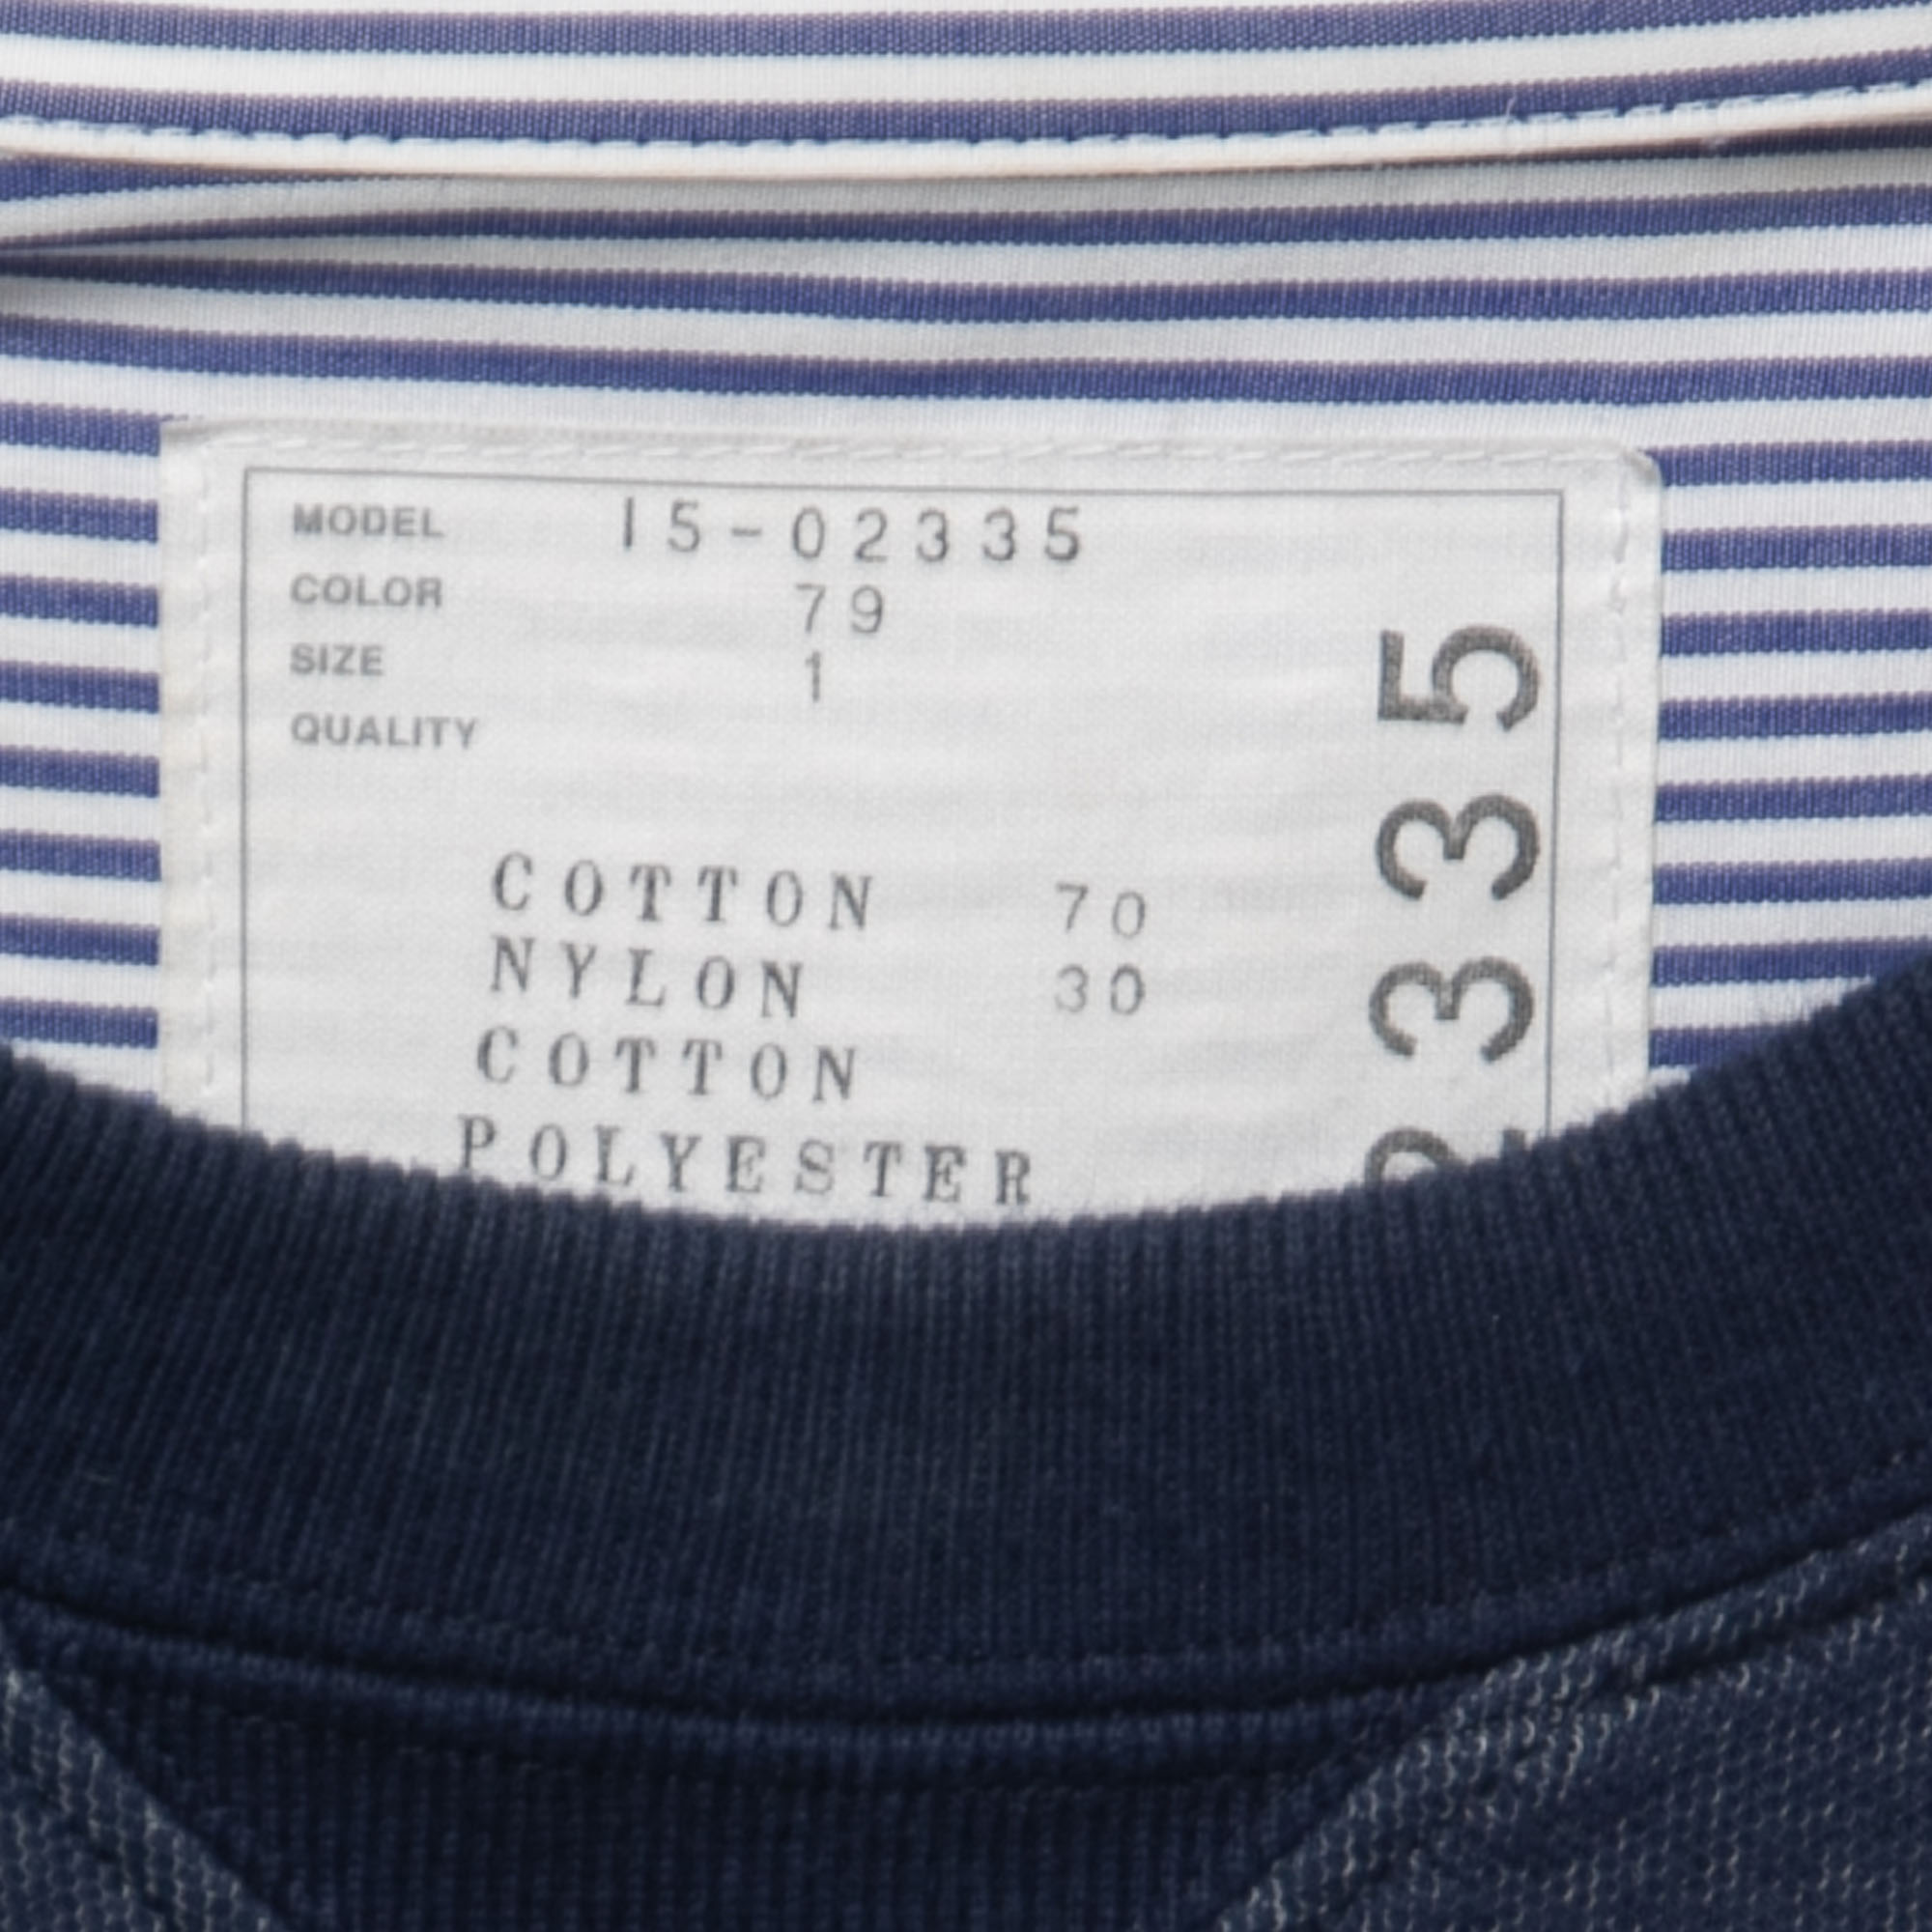 Sacai Navy Blue Knit & Striped Cotton Poplin Back Sweatshirt S